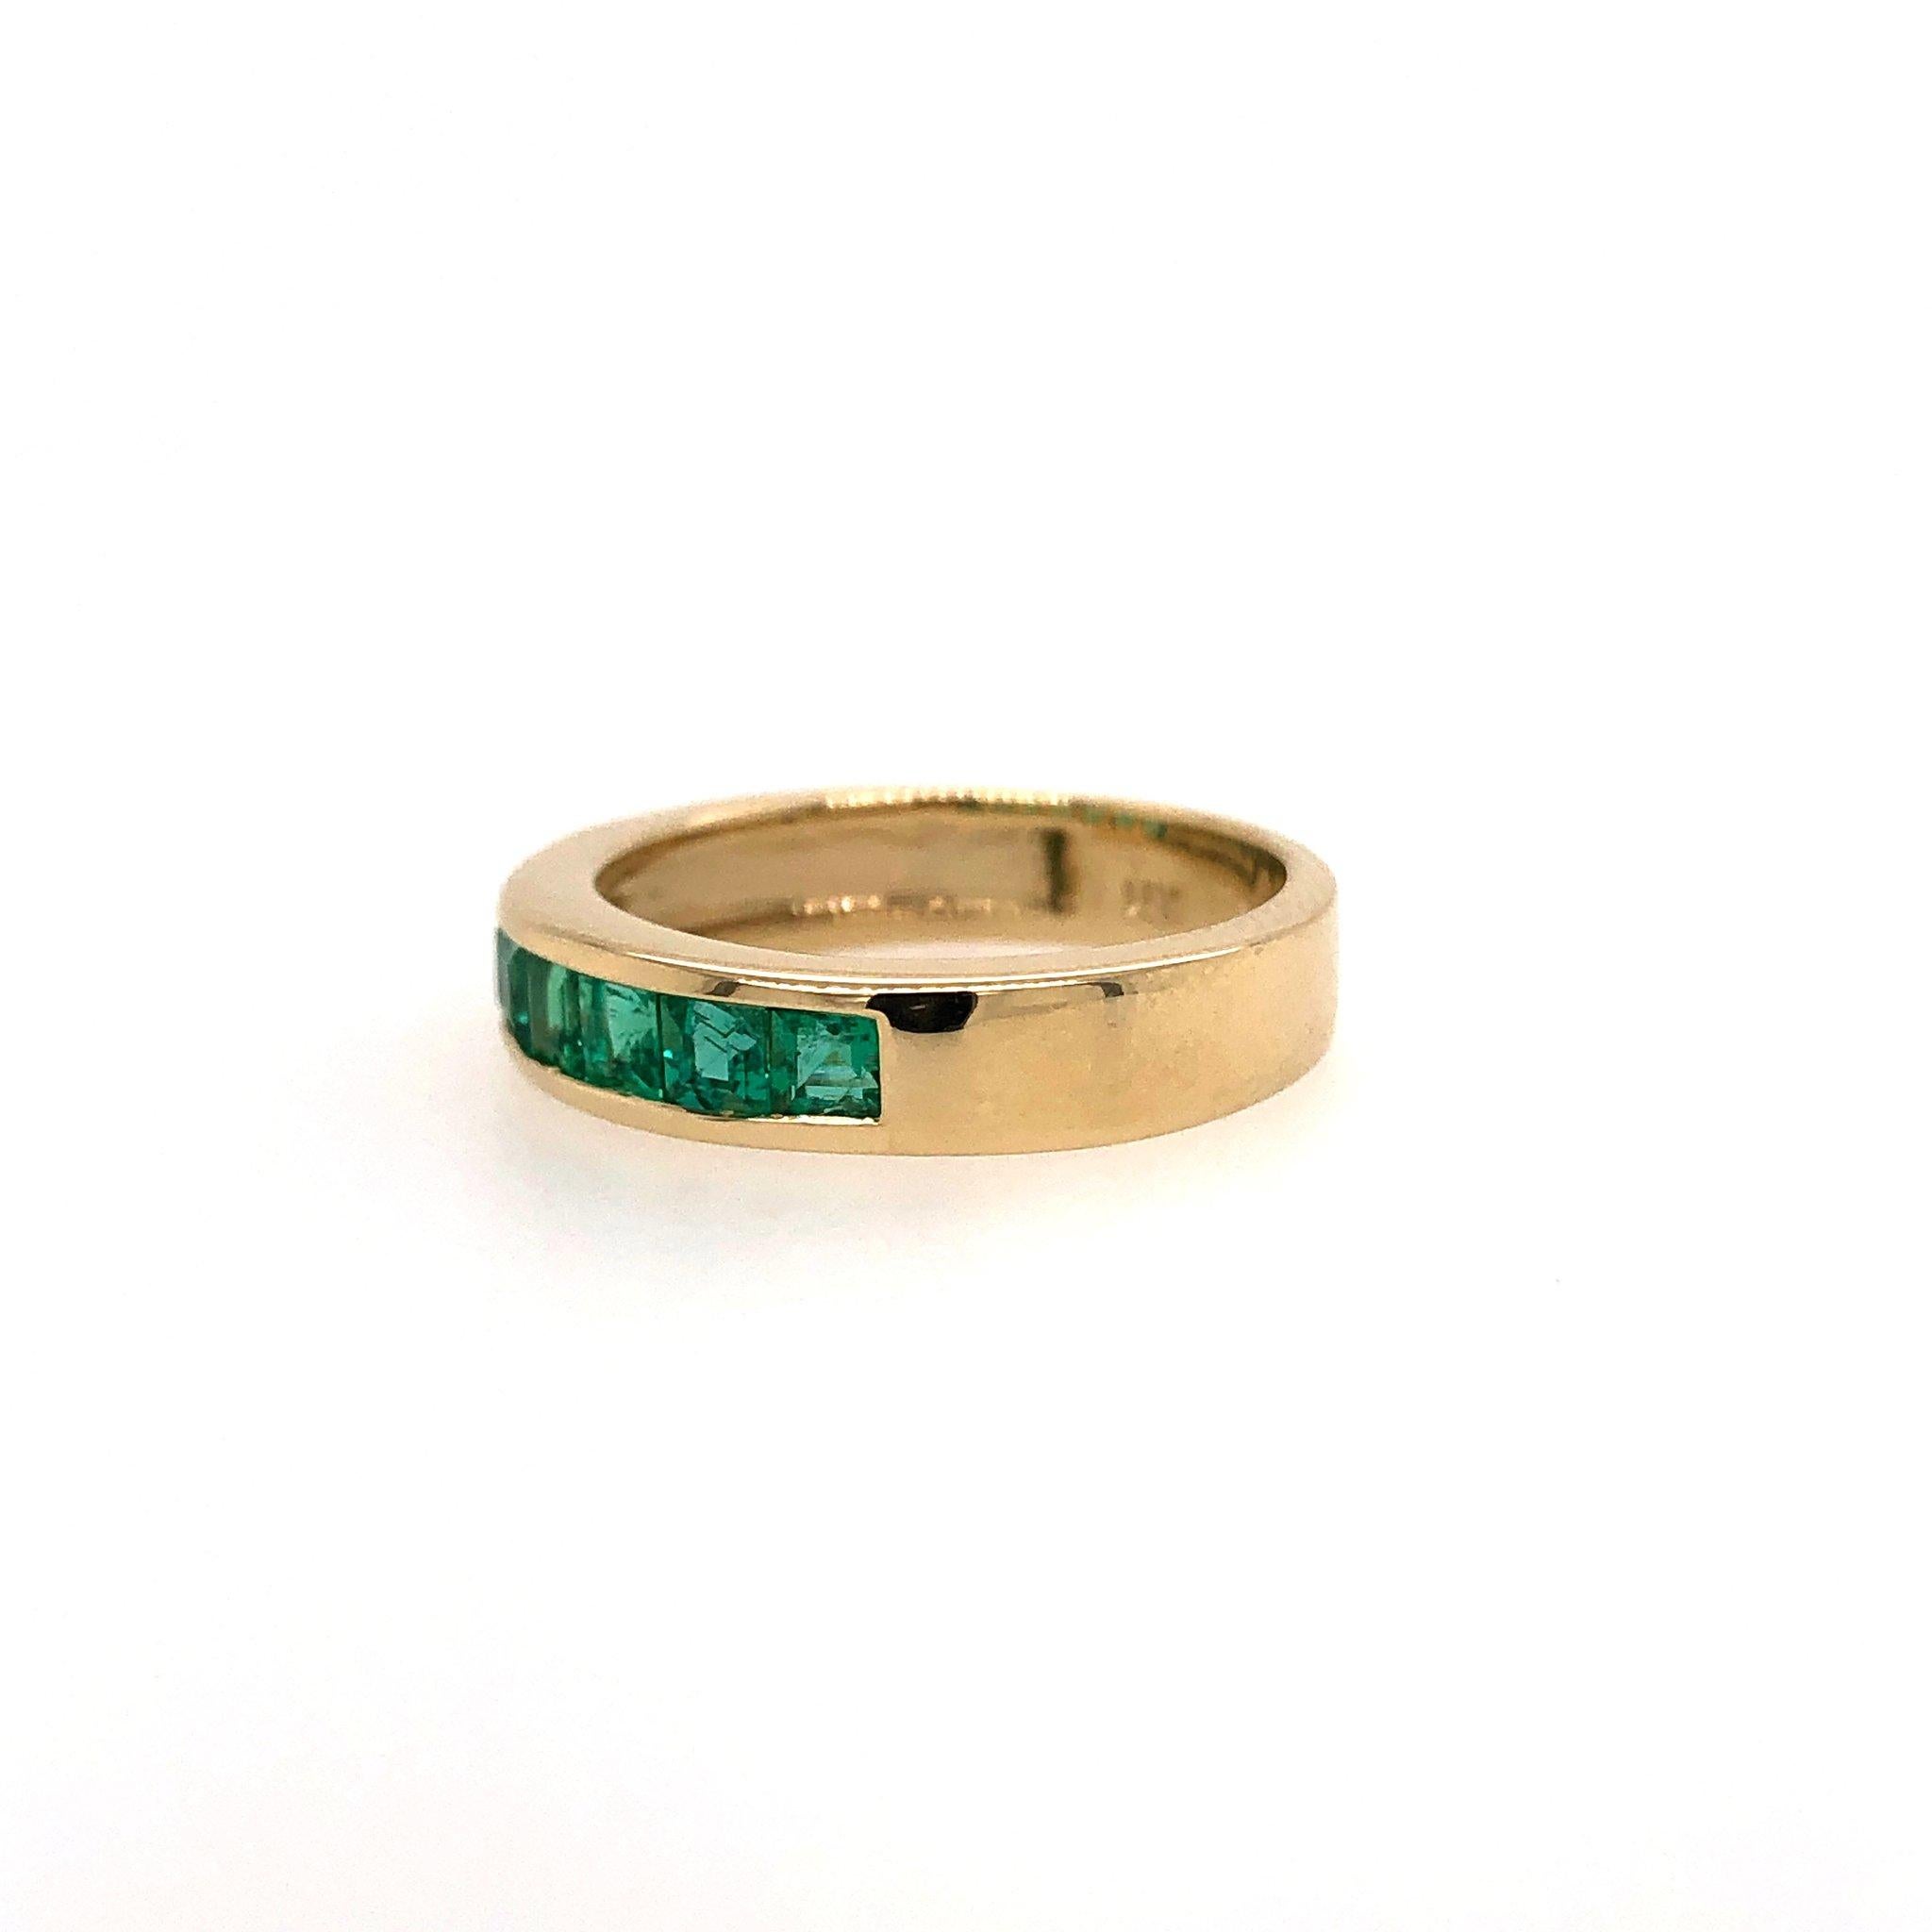 rachel green rings